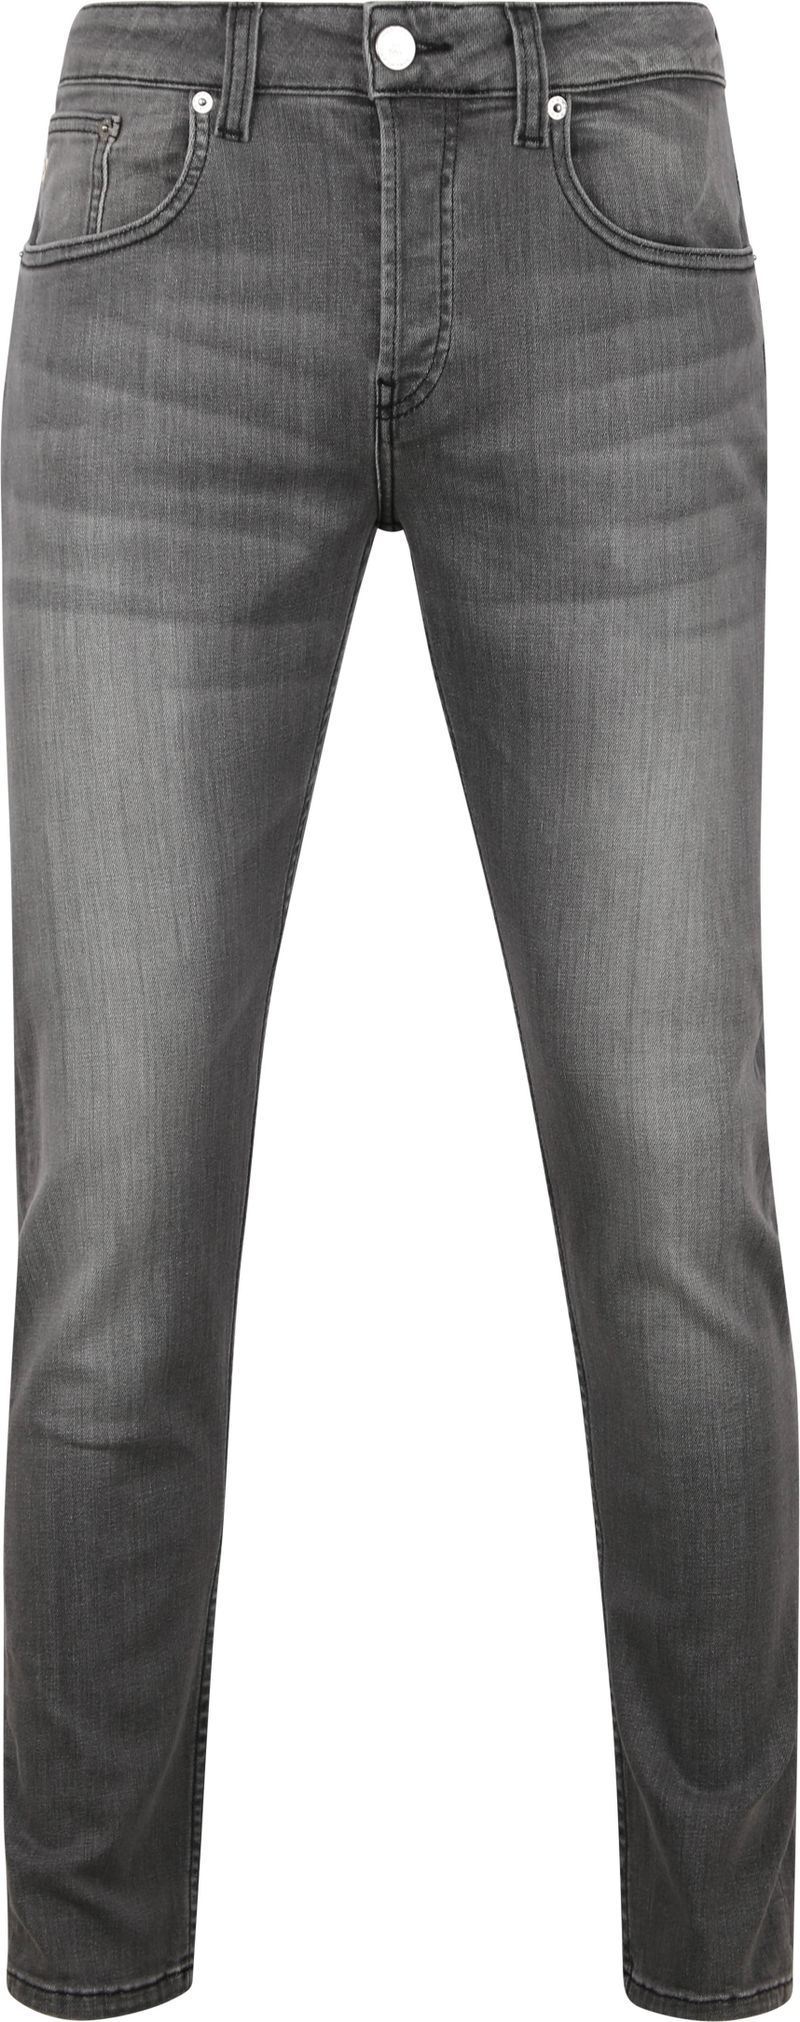 MUD Jeans Denim Slim-Fit Grau - Größe W 34 - L 34 von MUD Jeans